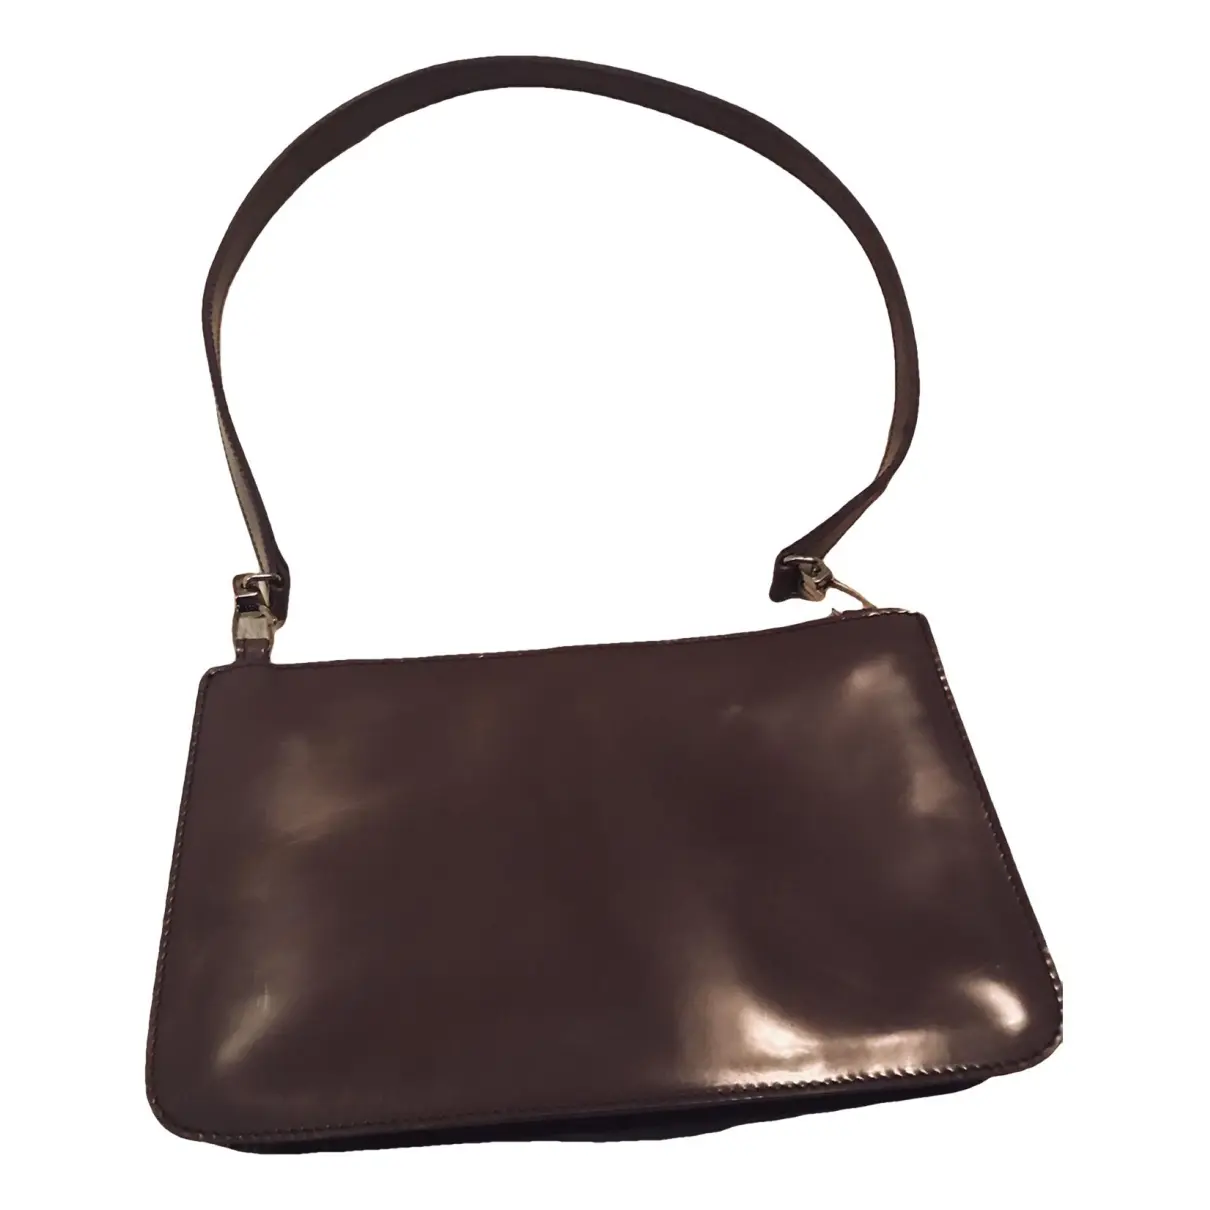 Patent leather clutch bag Furla